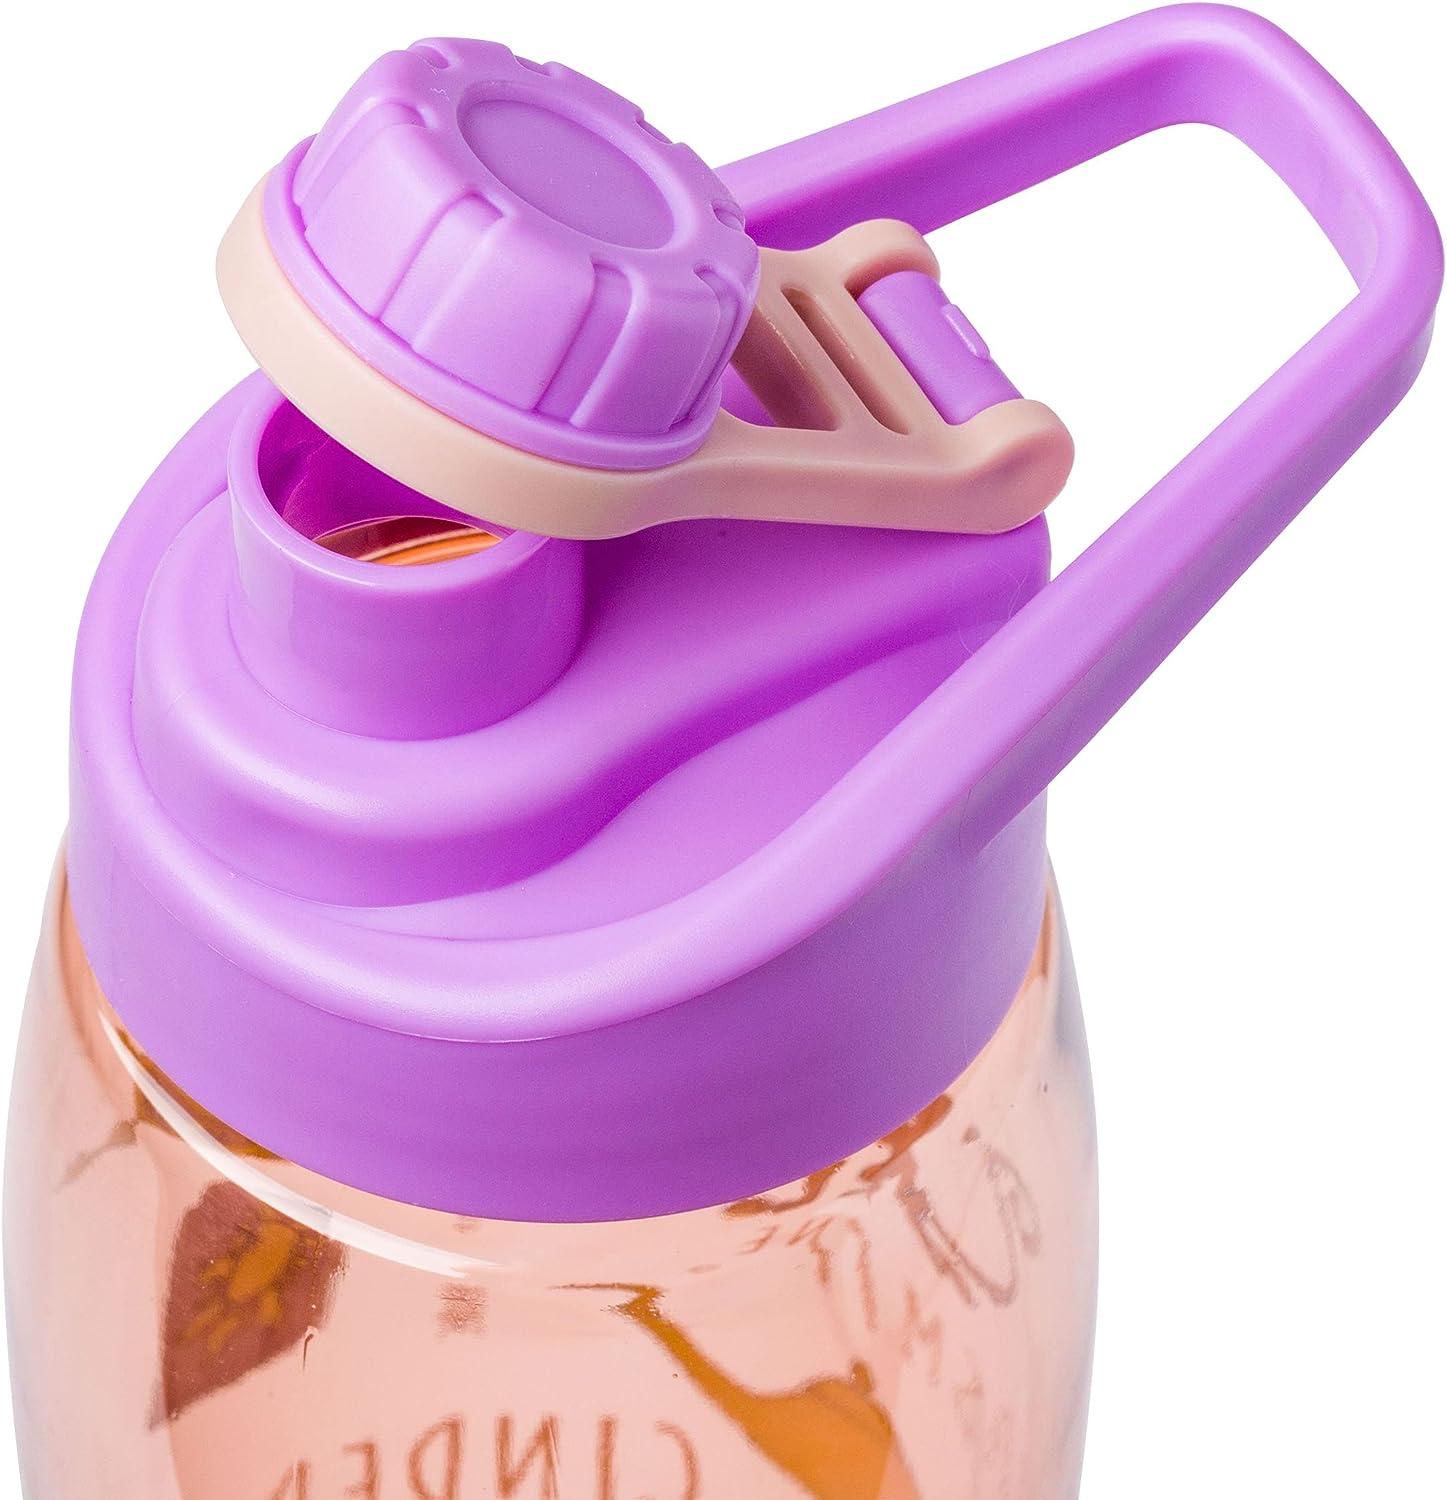 Disney Princess Rapunzel Girls Snack & Water Bottle BPA-Free